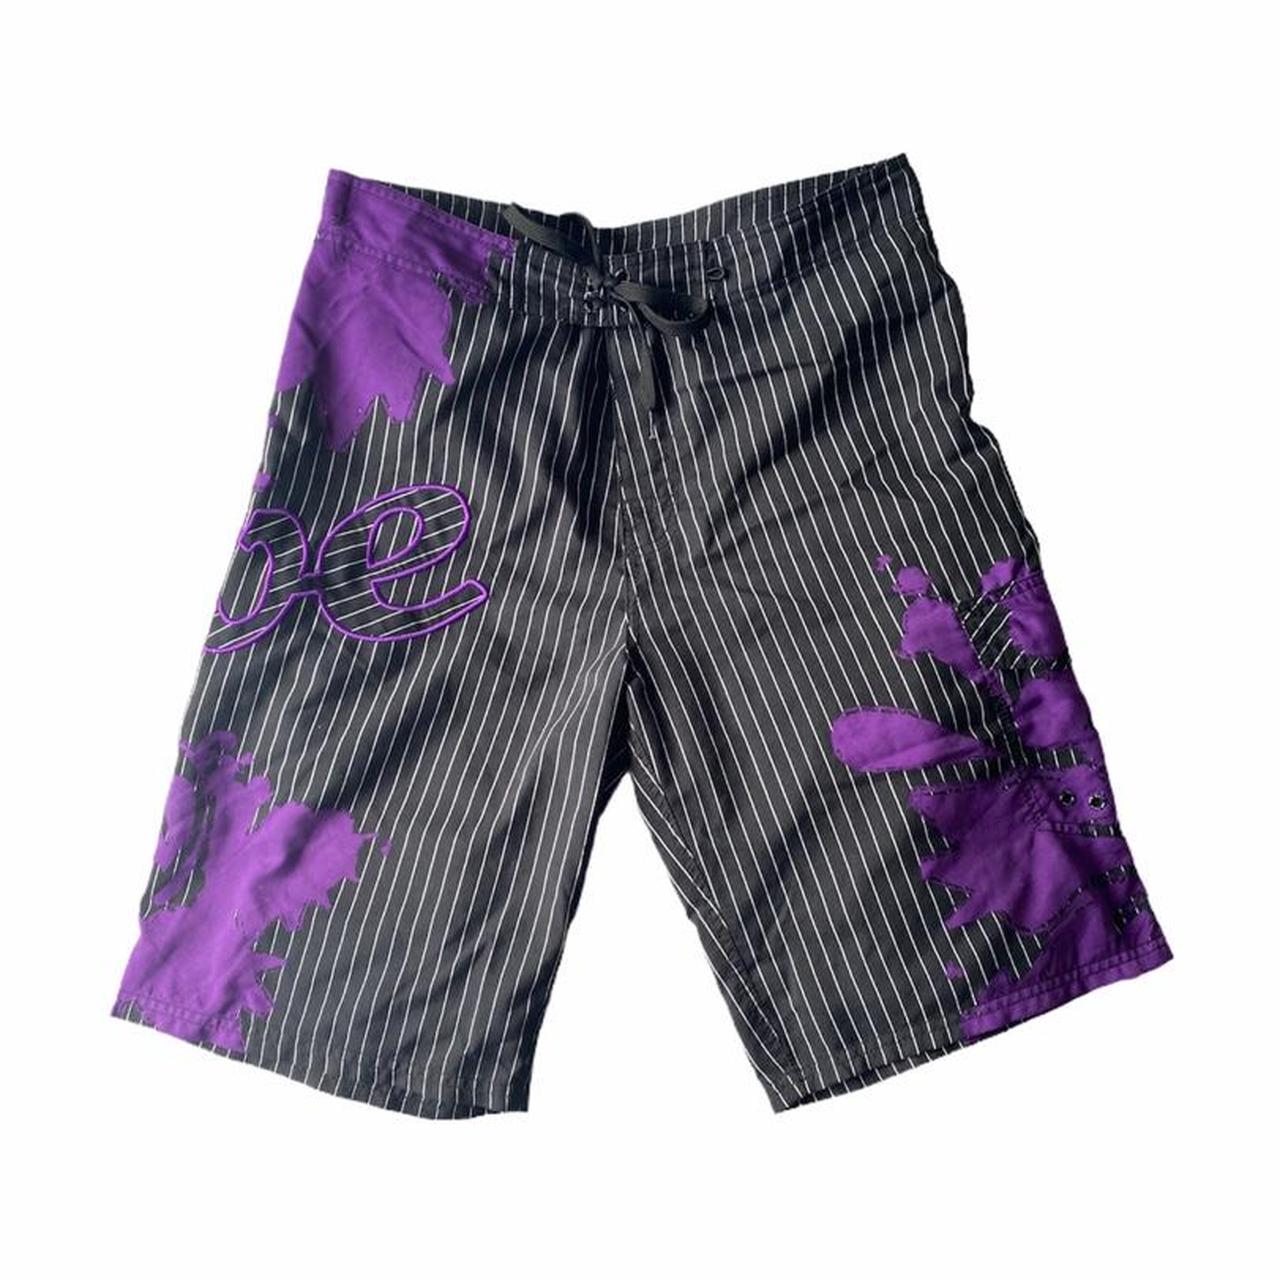 Men's Black and Purple Shorts | Depop